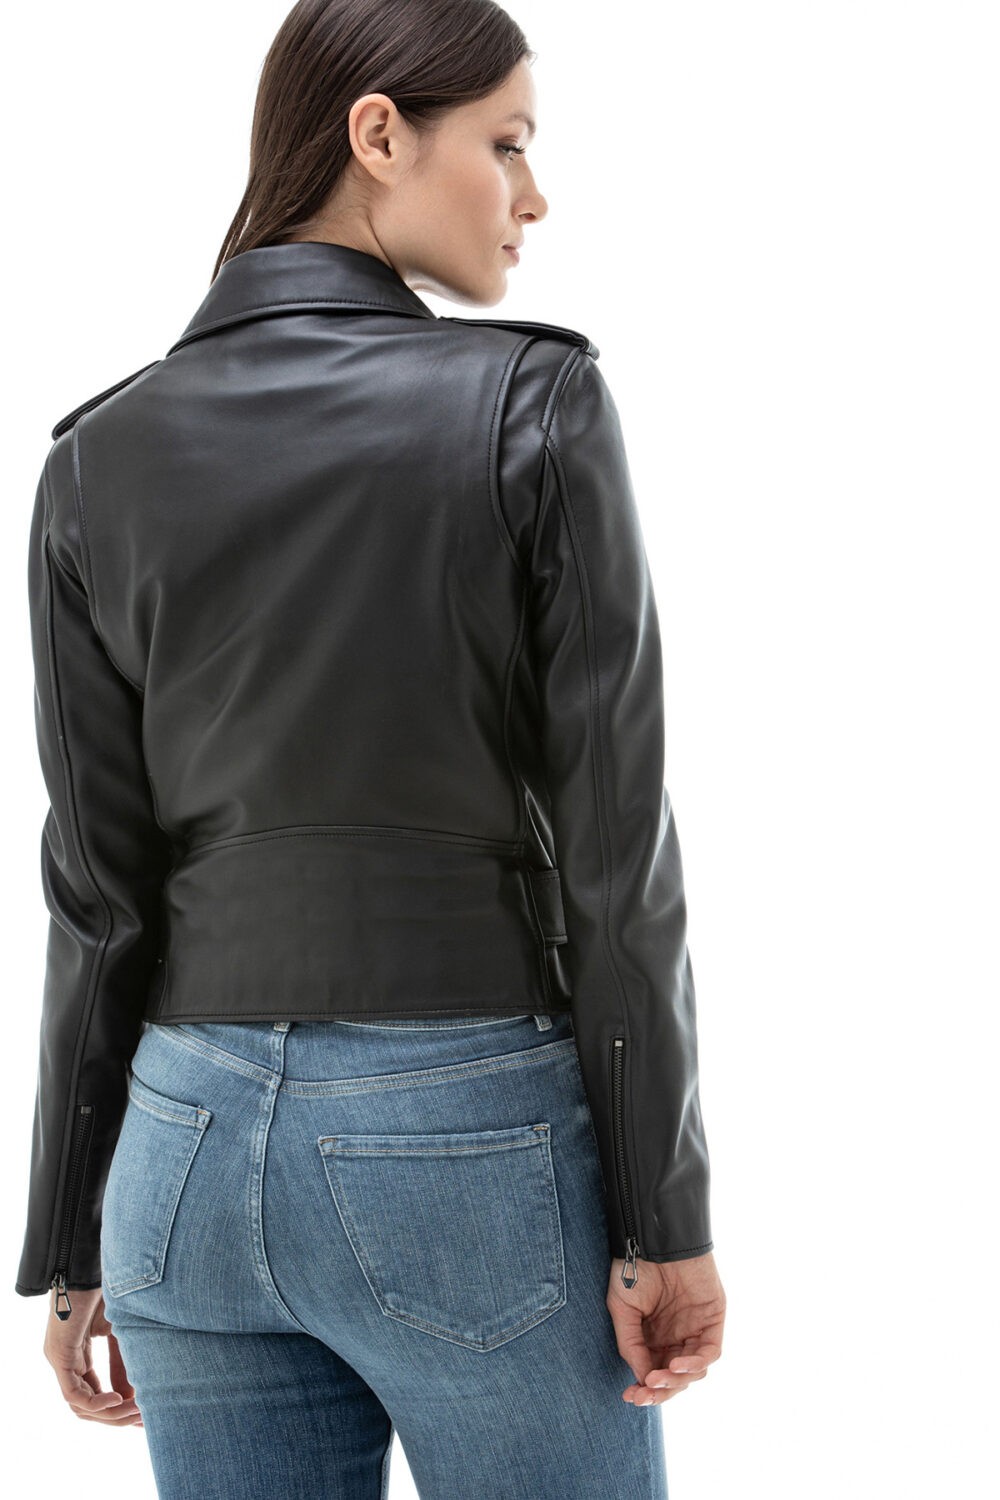 Shiela Women's 100 % Real White Leather Brando Jacket